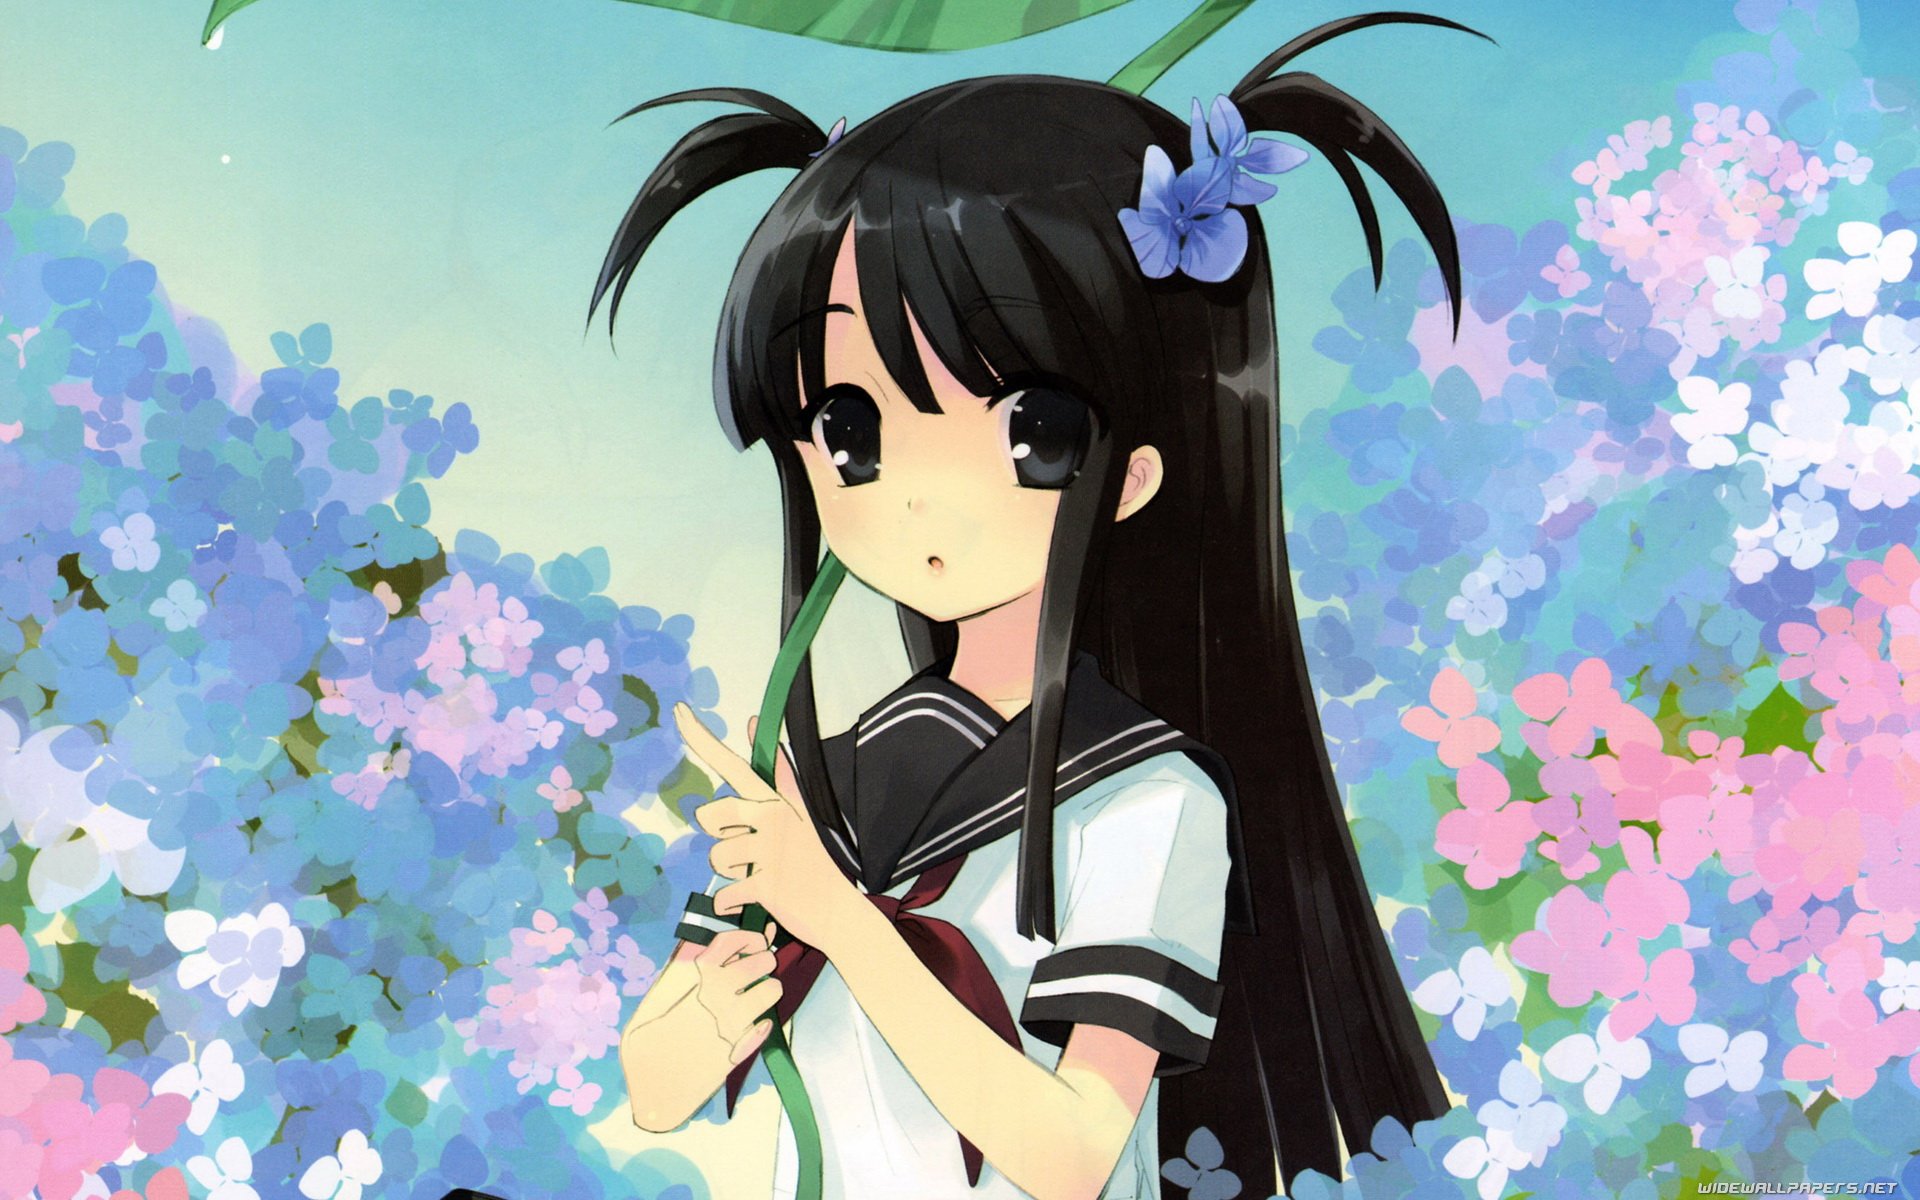  Full HD Cute Anime Wallpapers For Desktop